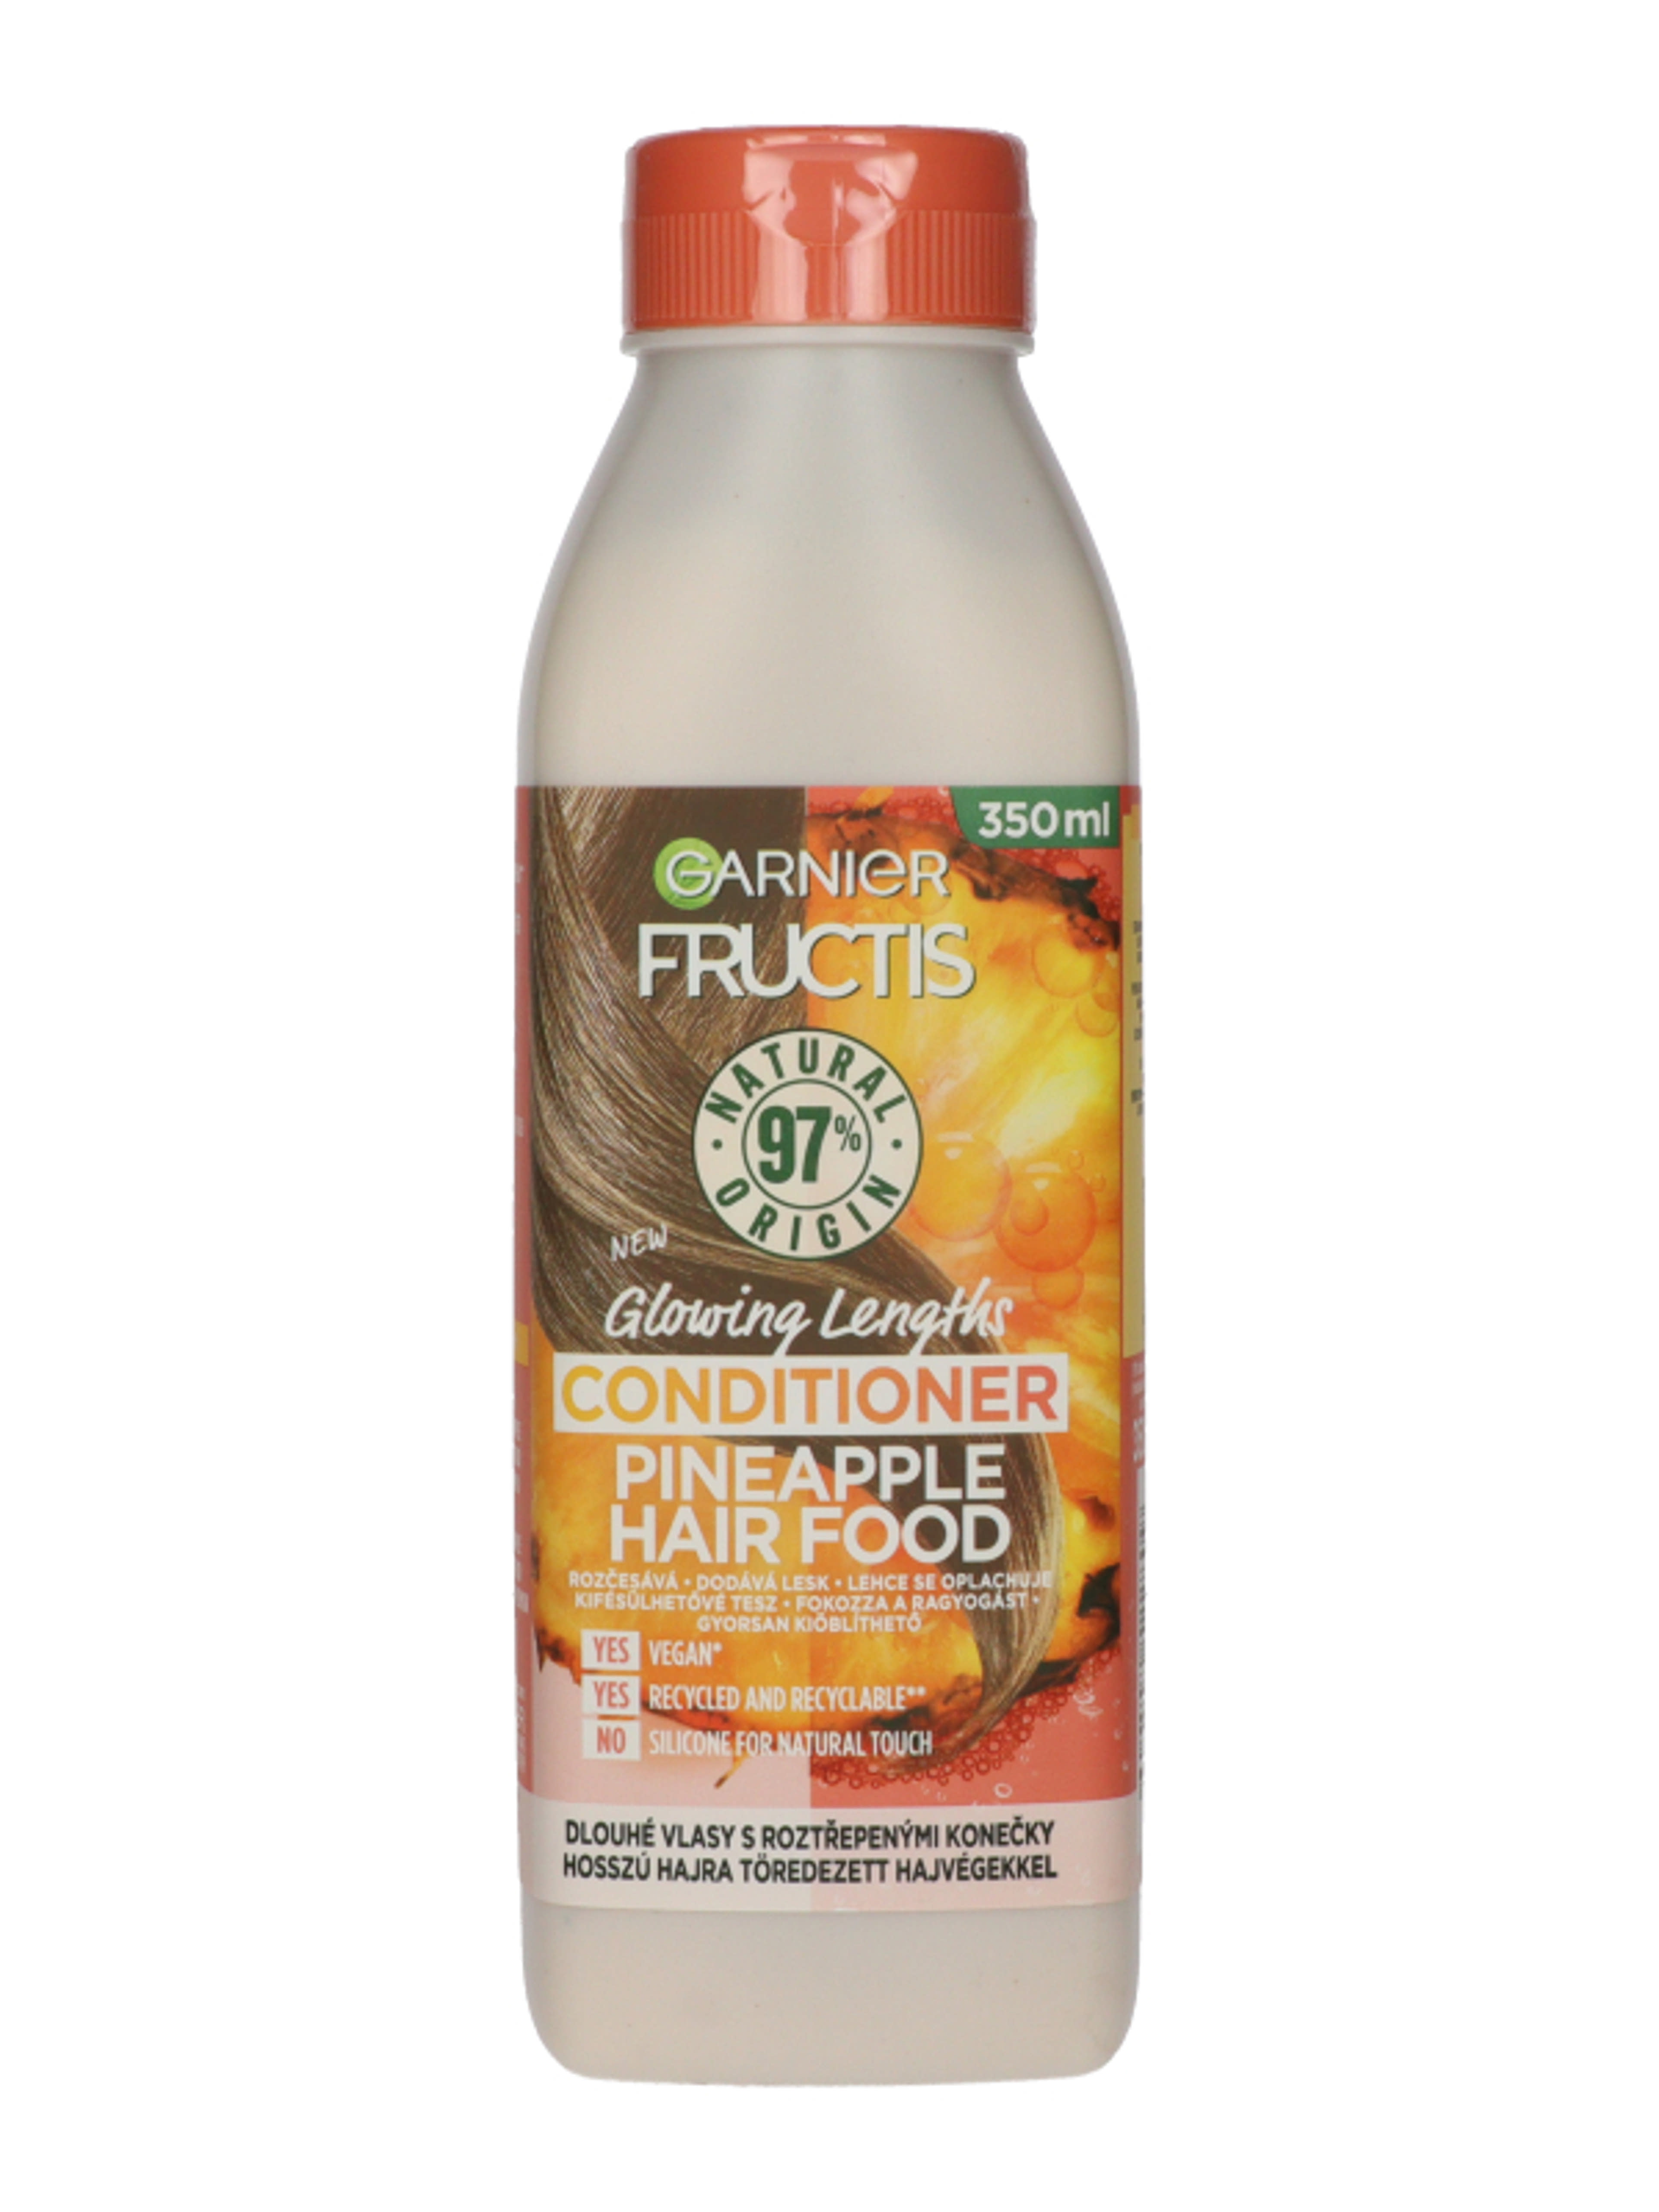 Garnier Fructis Hair Food Pineapple balzsam - 350 ml